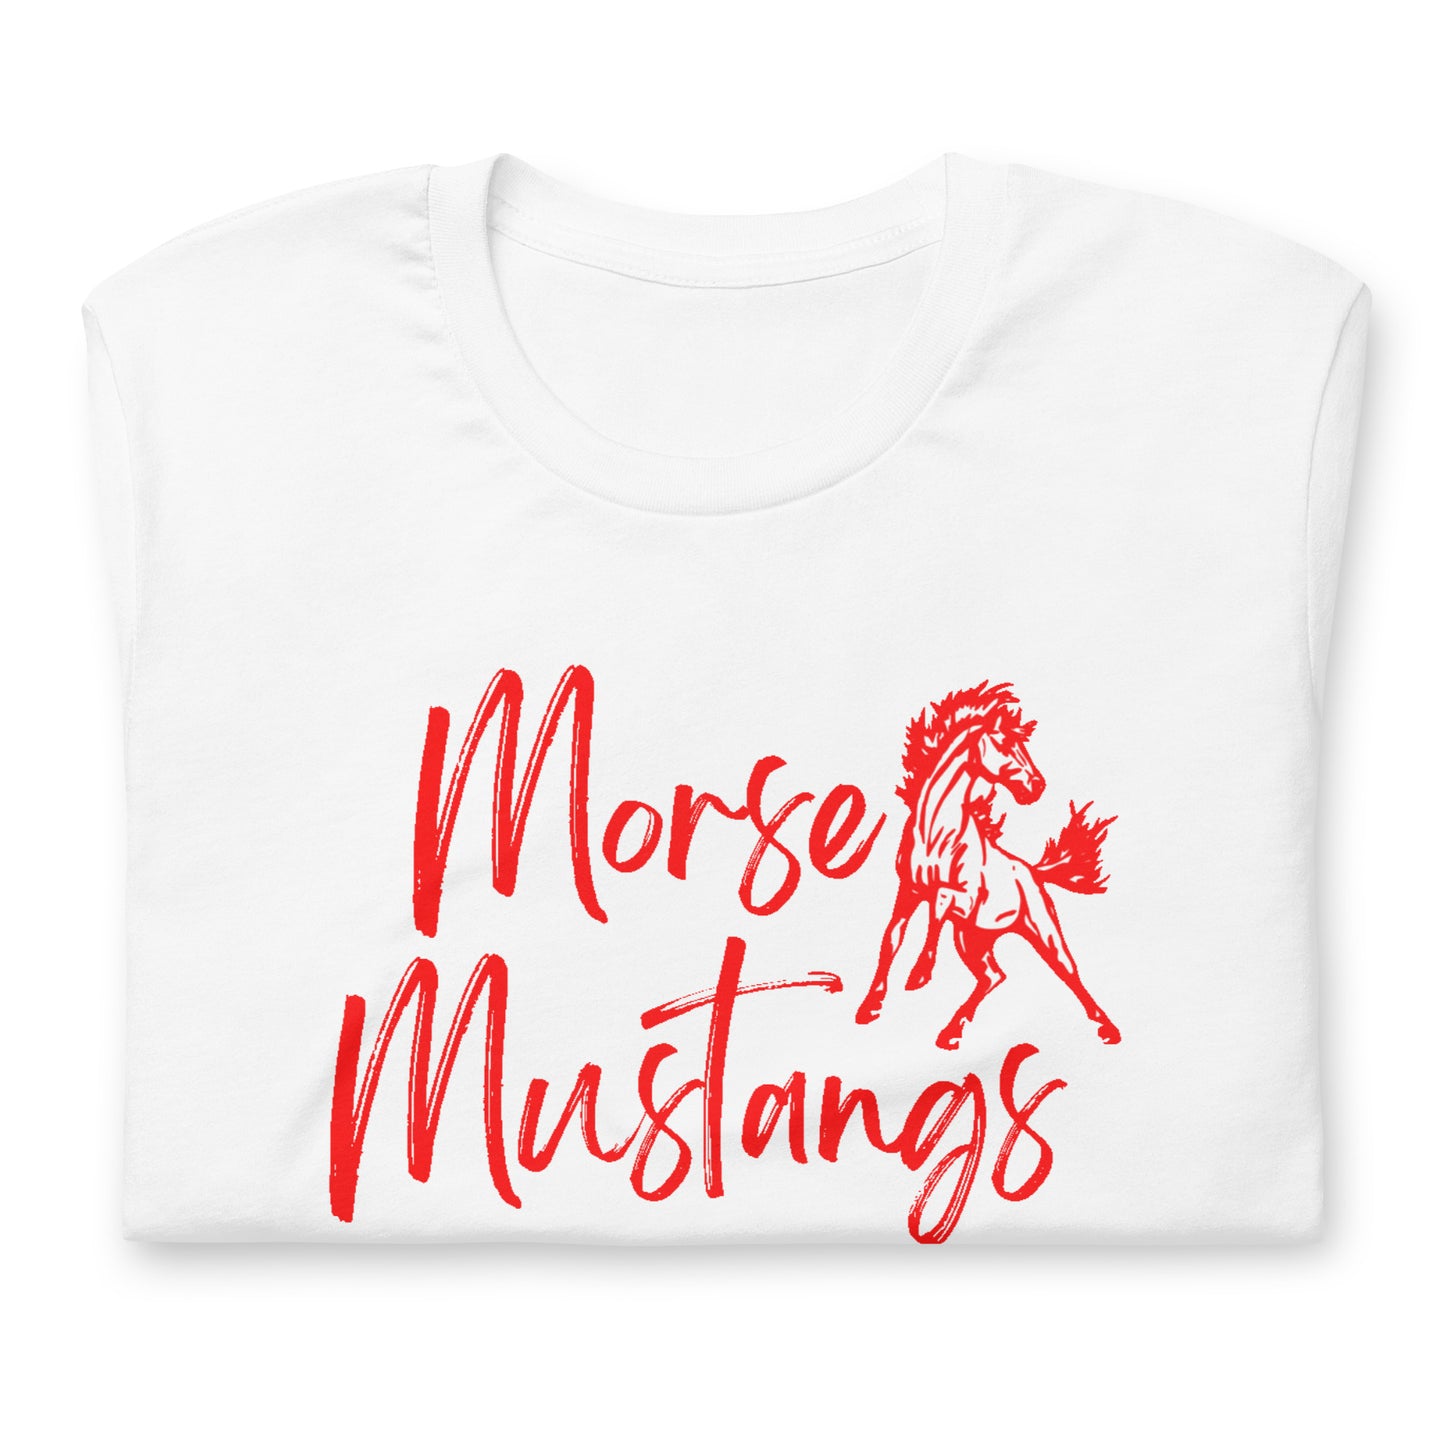 Morse Mustangs Unisex T-Shirt